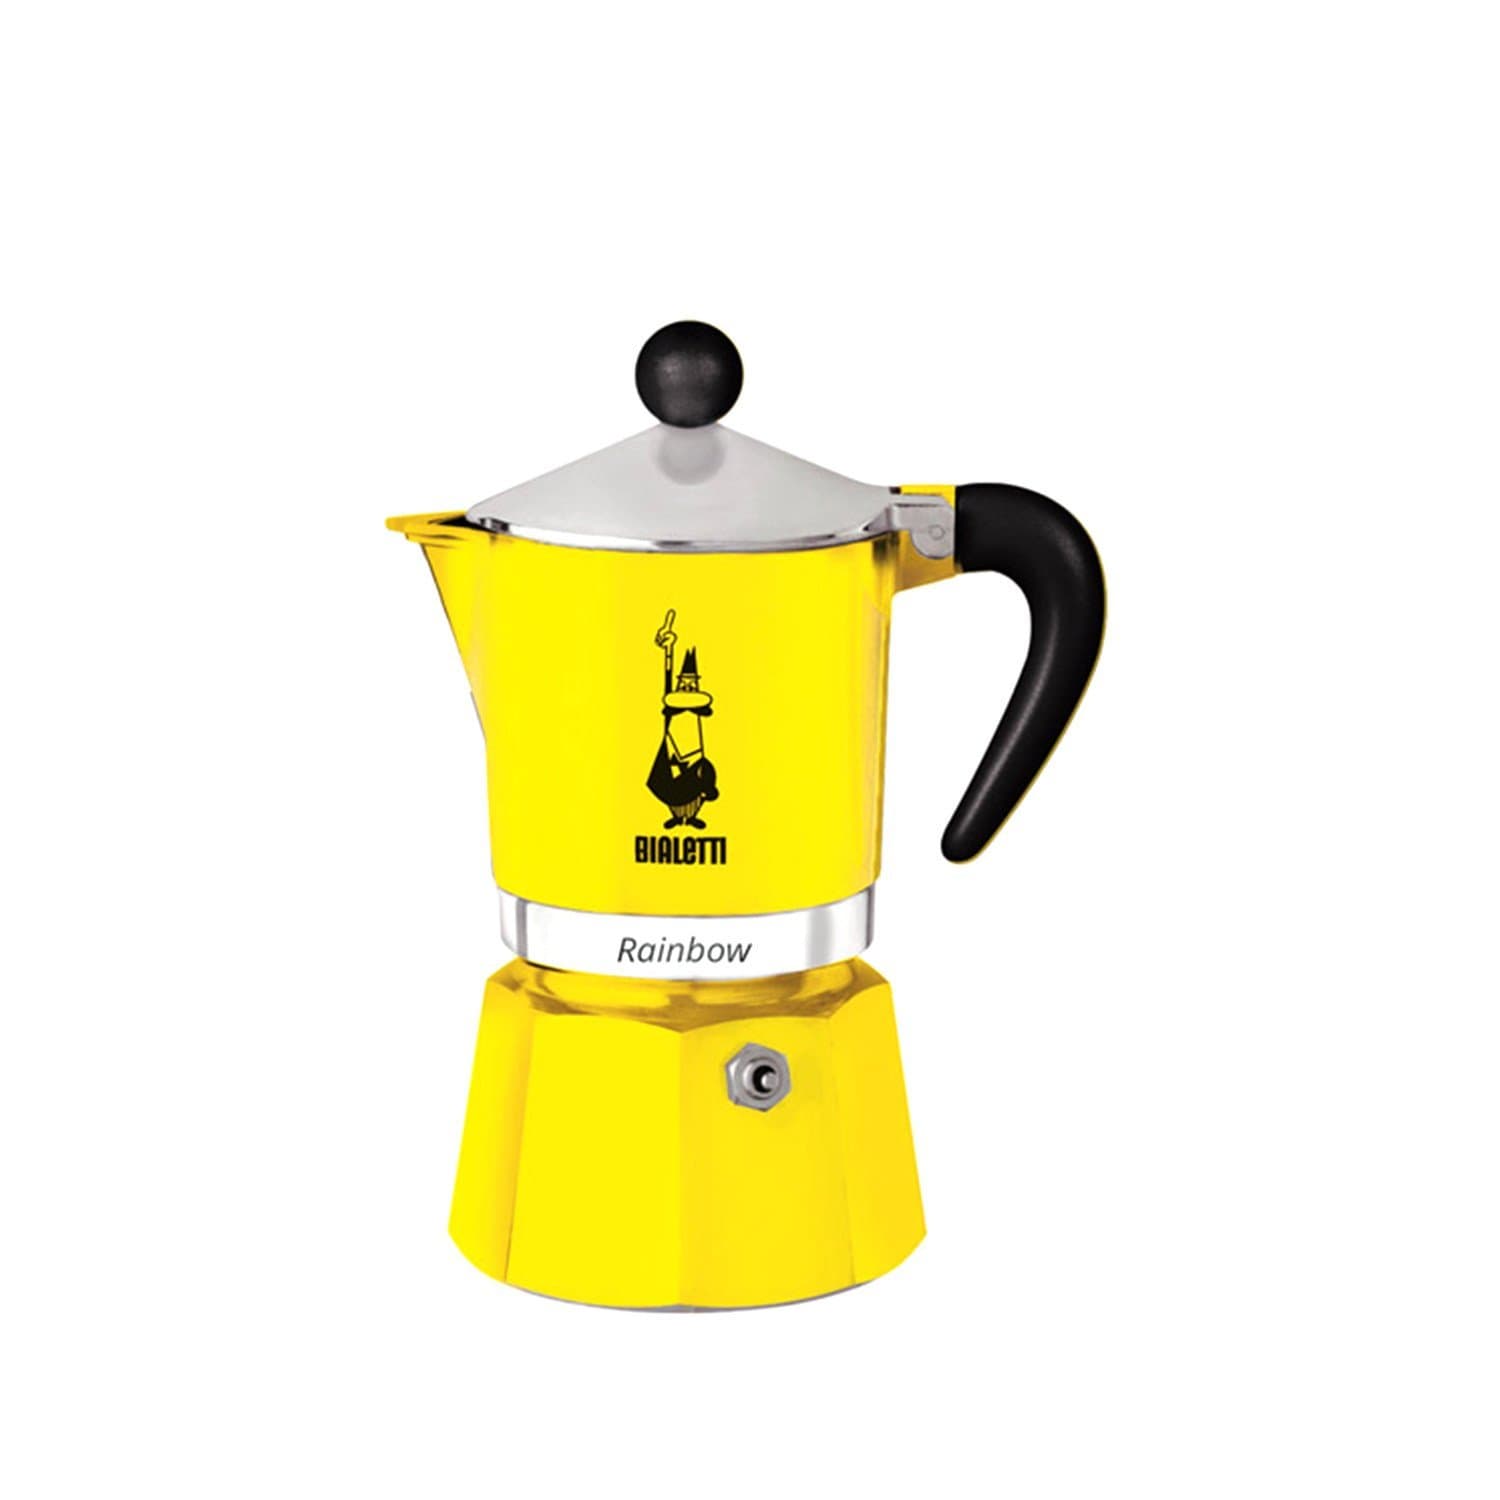 Bialetti Rainbow Coffee Maker - Yellow, 6 Cups - 4983 - Jashanmal Home